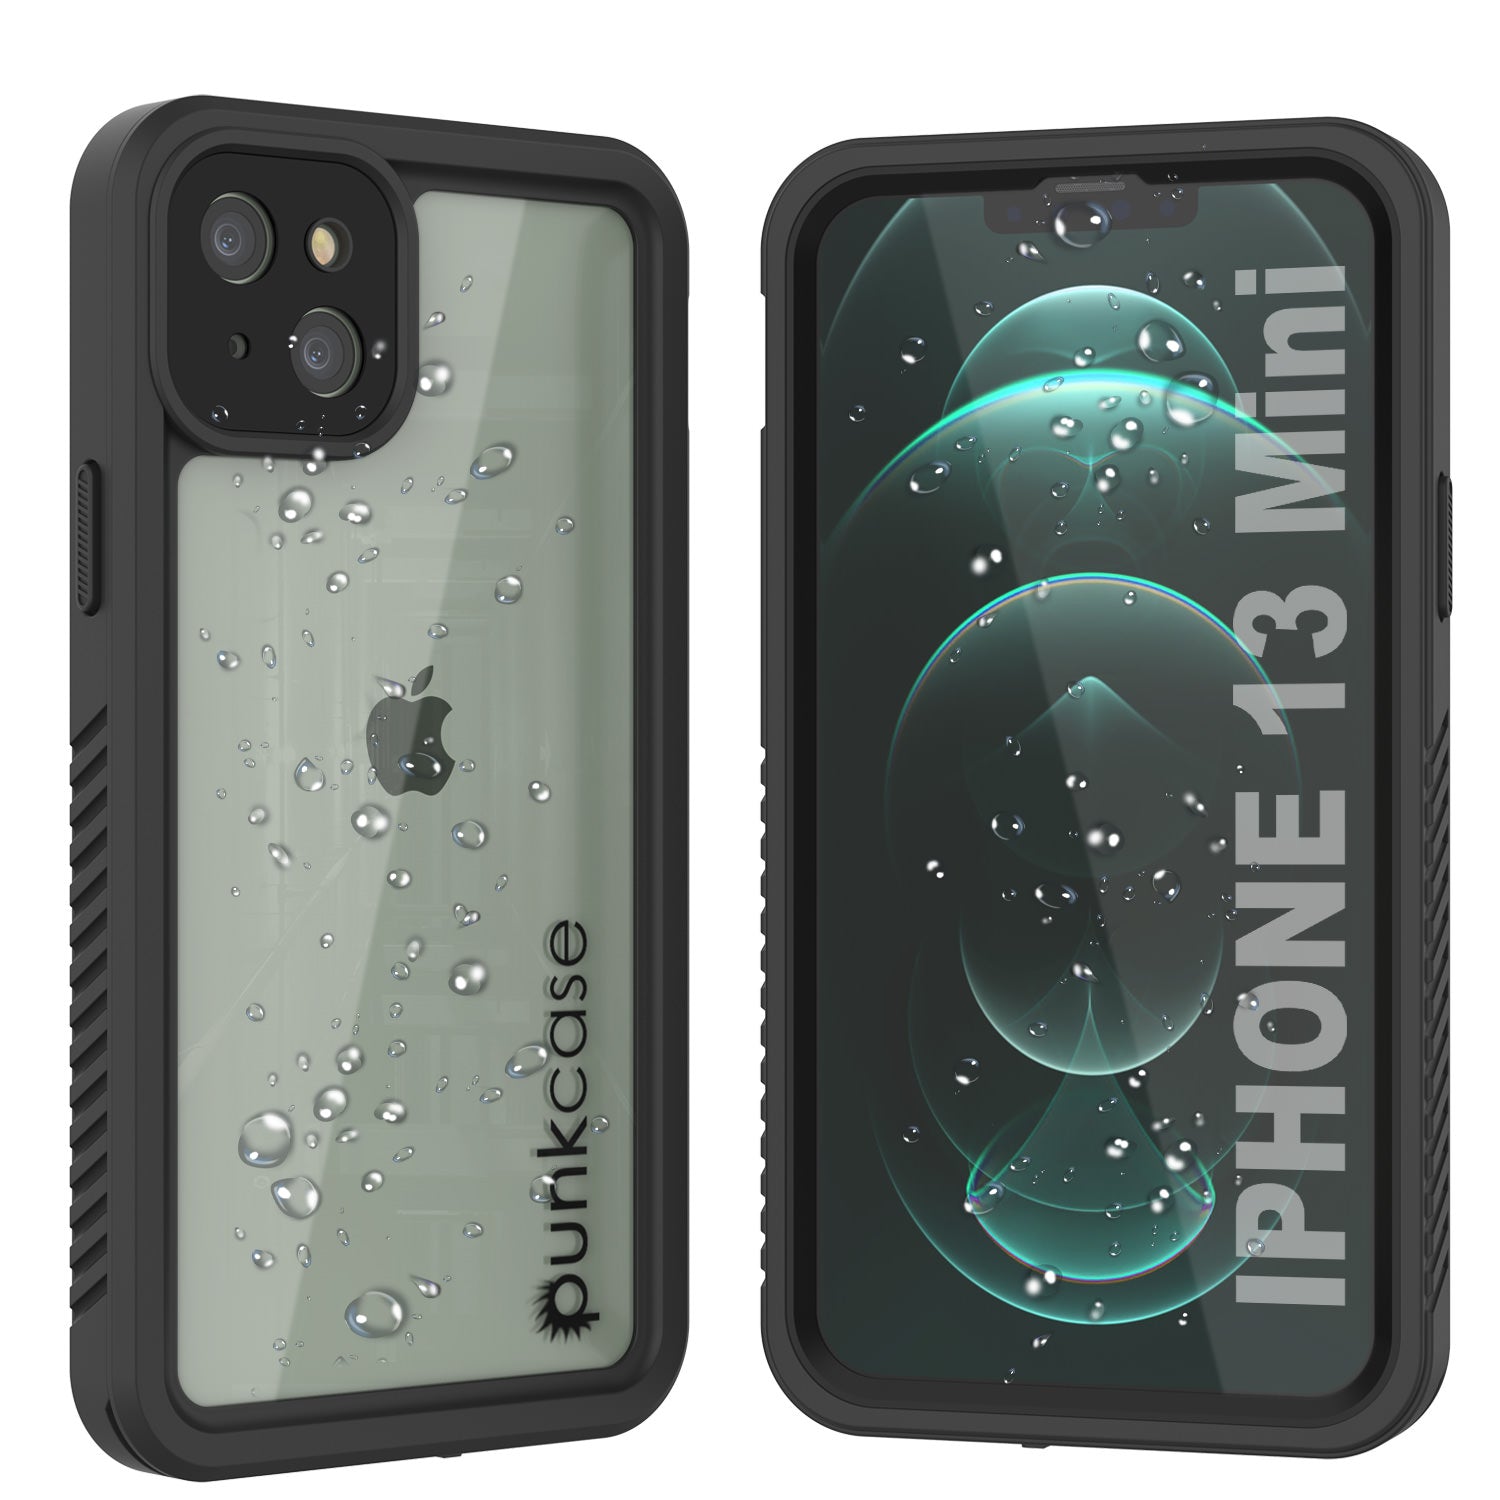 IPhone 11 Waterproof IP68 Case, Punkcase [Light Green], 48% OFF